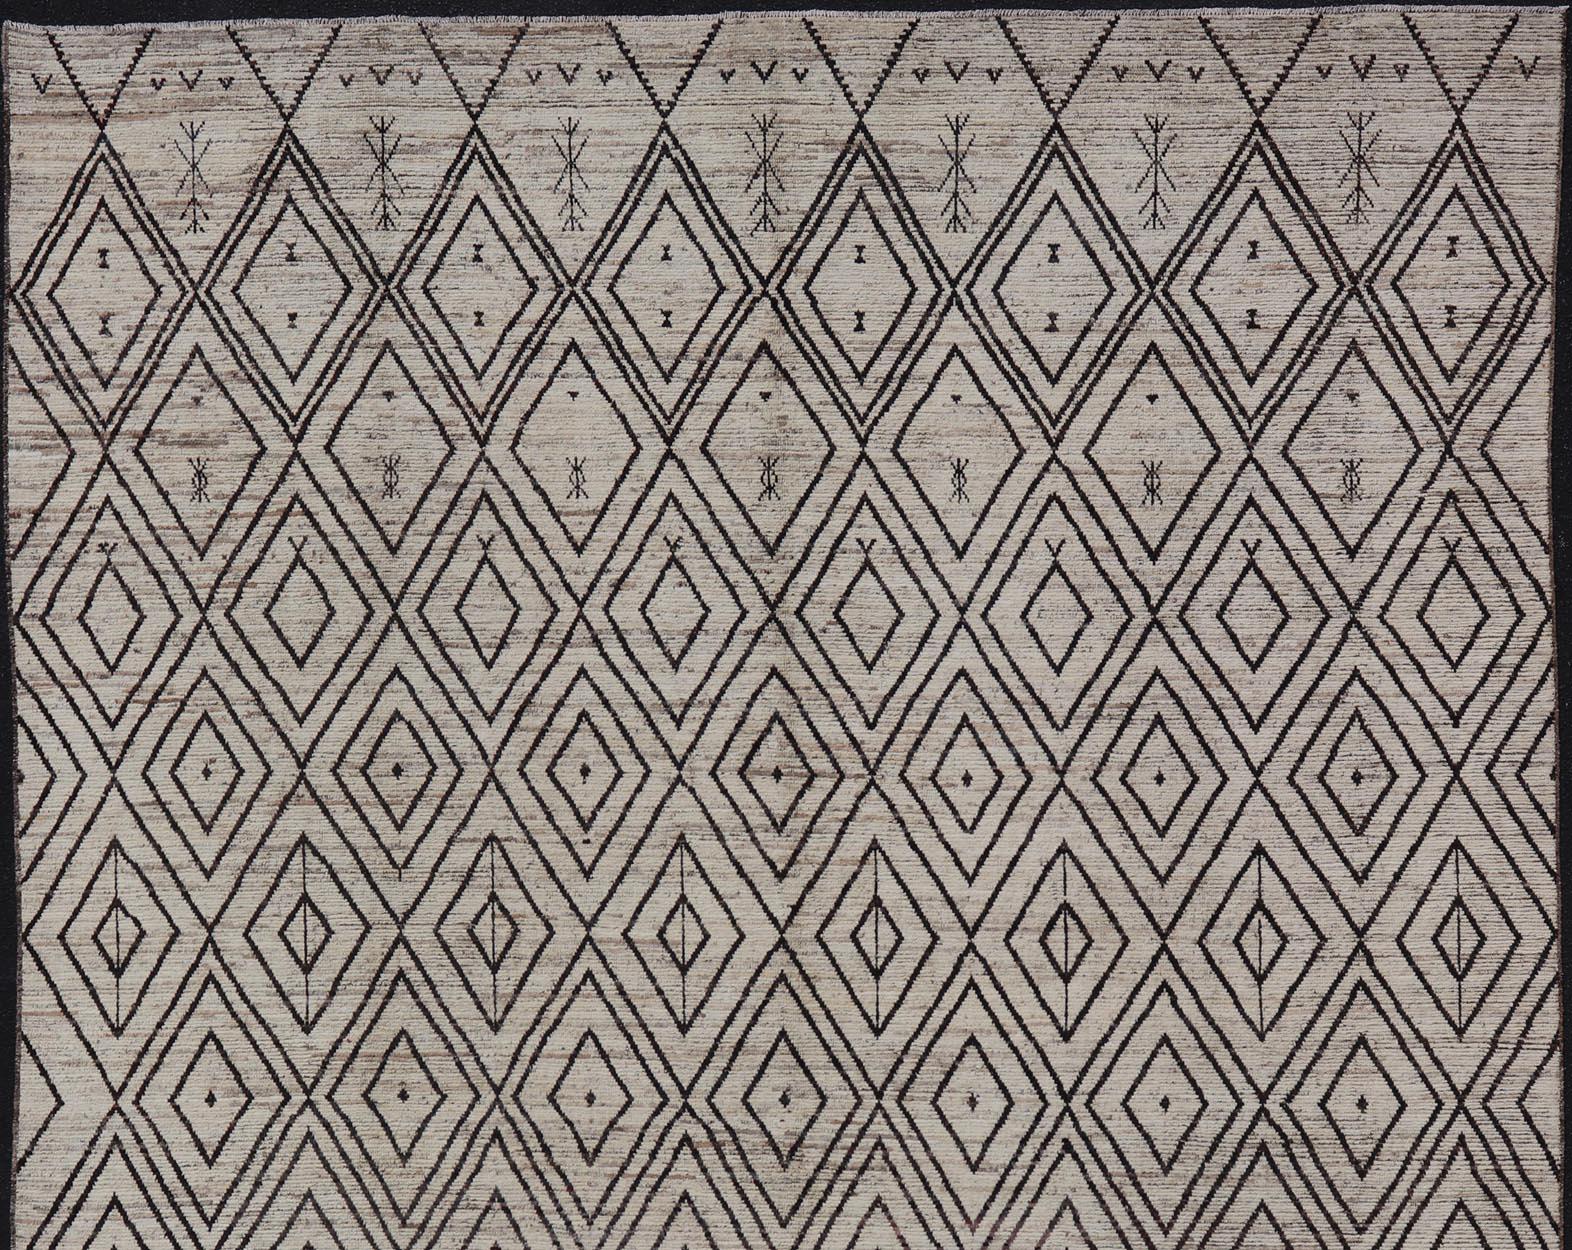  Tribal Moroccan Modern Rug in Wool with Geometric Diamond Design  For Sale 5